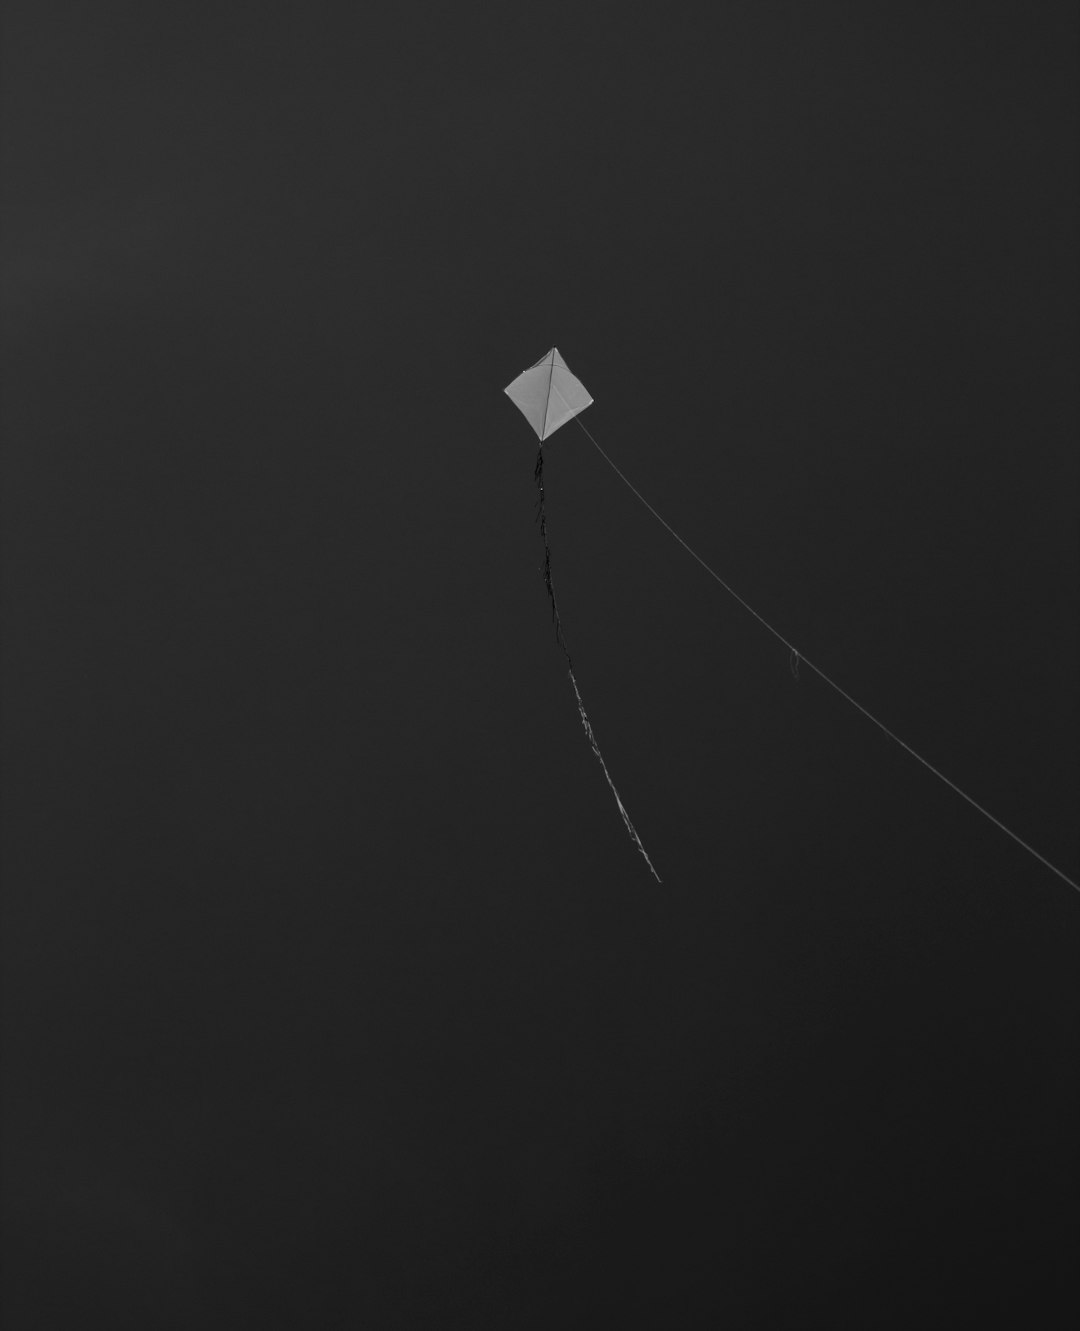 grayscale photo of white kite